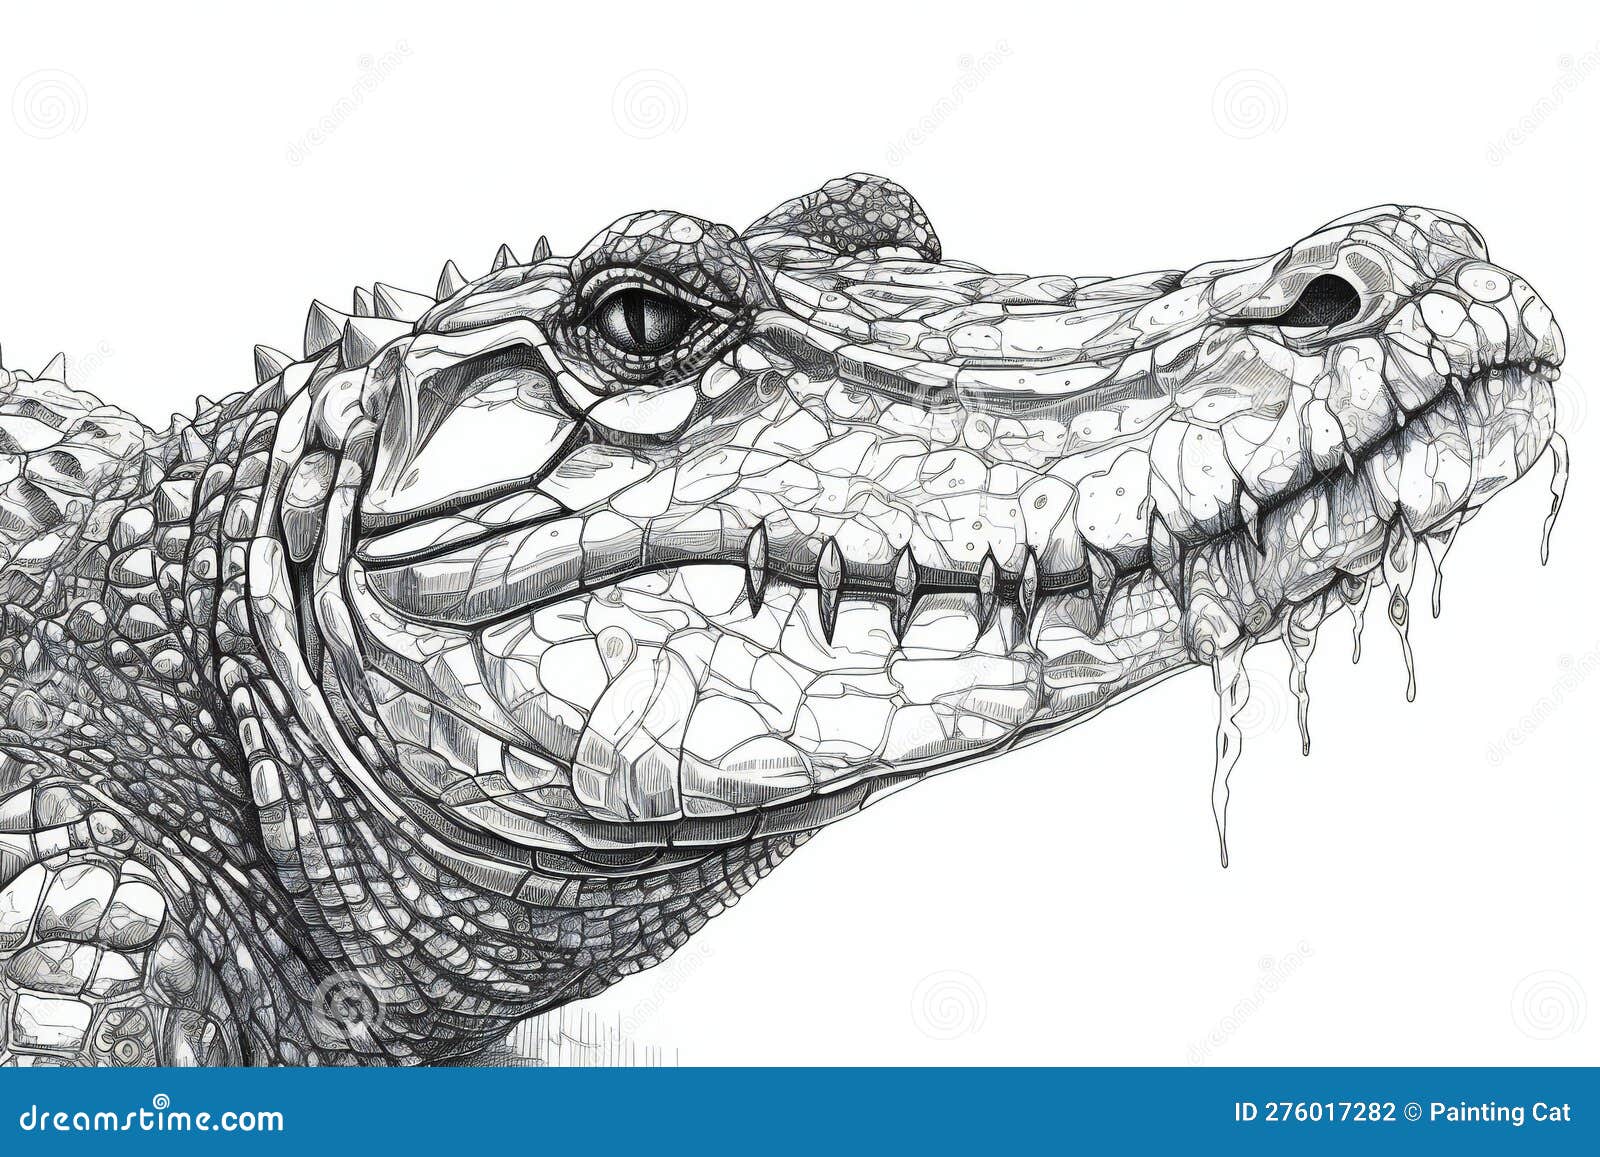 Image of Crocodile drawing-QQ014727-Picxy